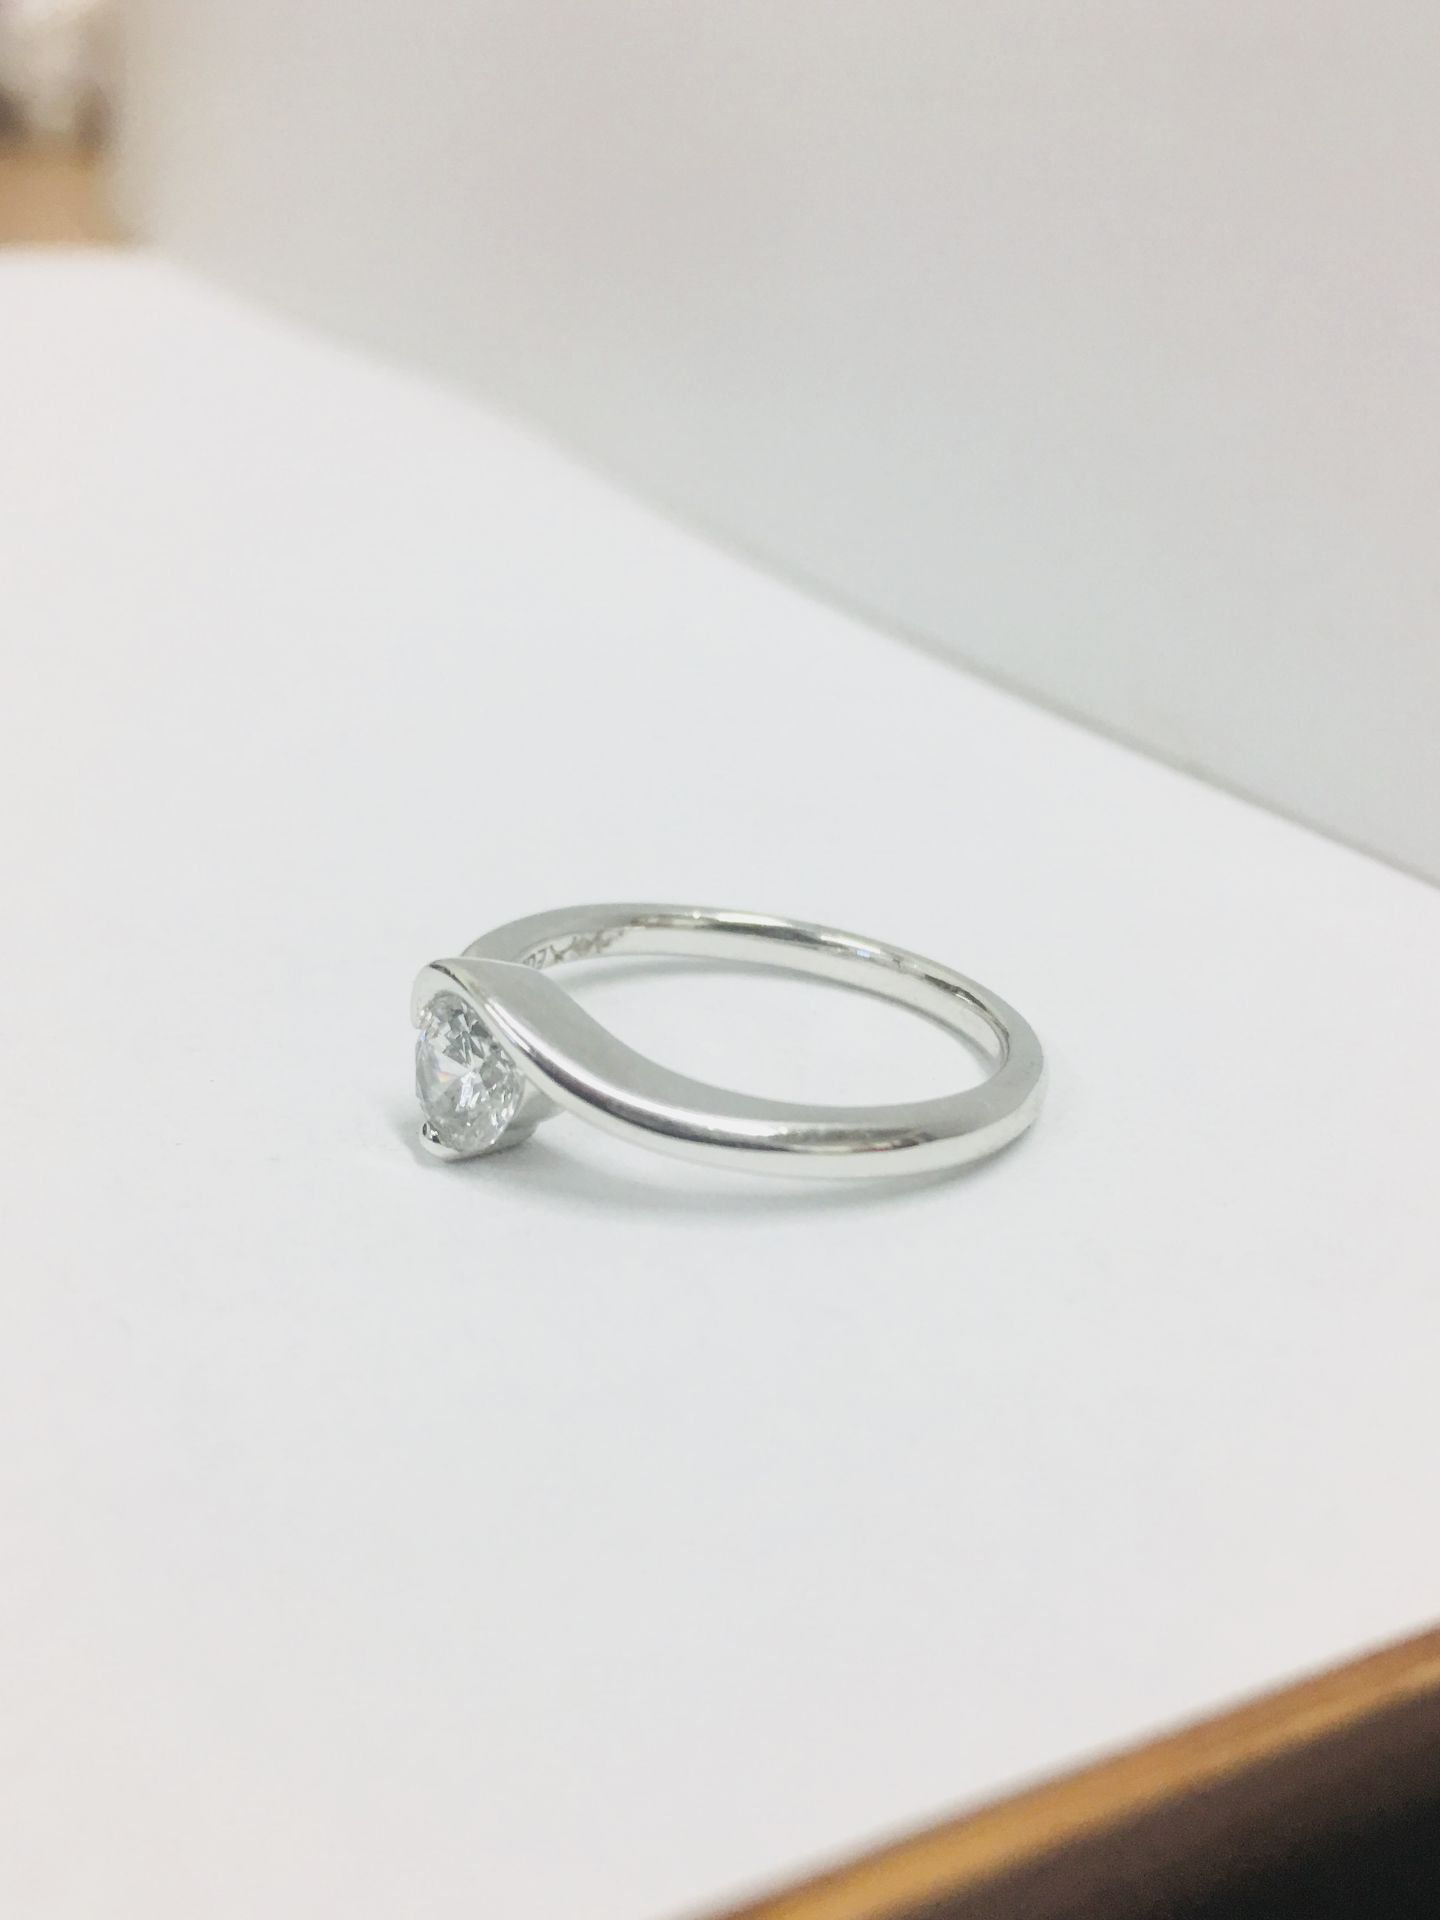 Platinum twist style diamond solitaire ring,0.50ct D colour vs clarity diamond,4.68gms platinum,uk - Image 6 of 7